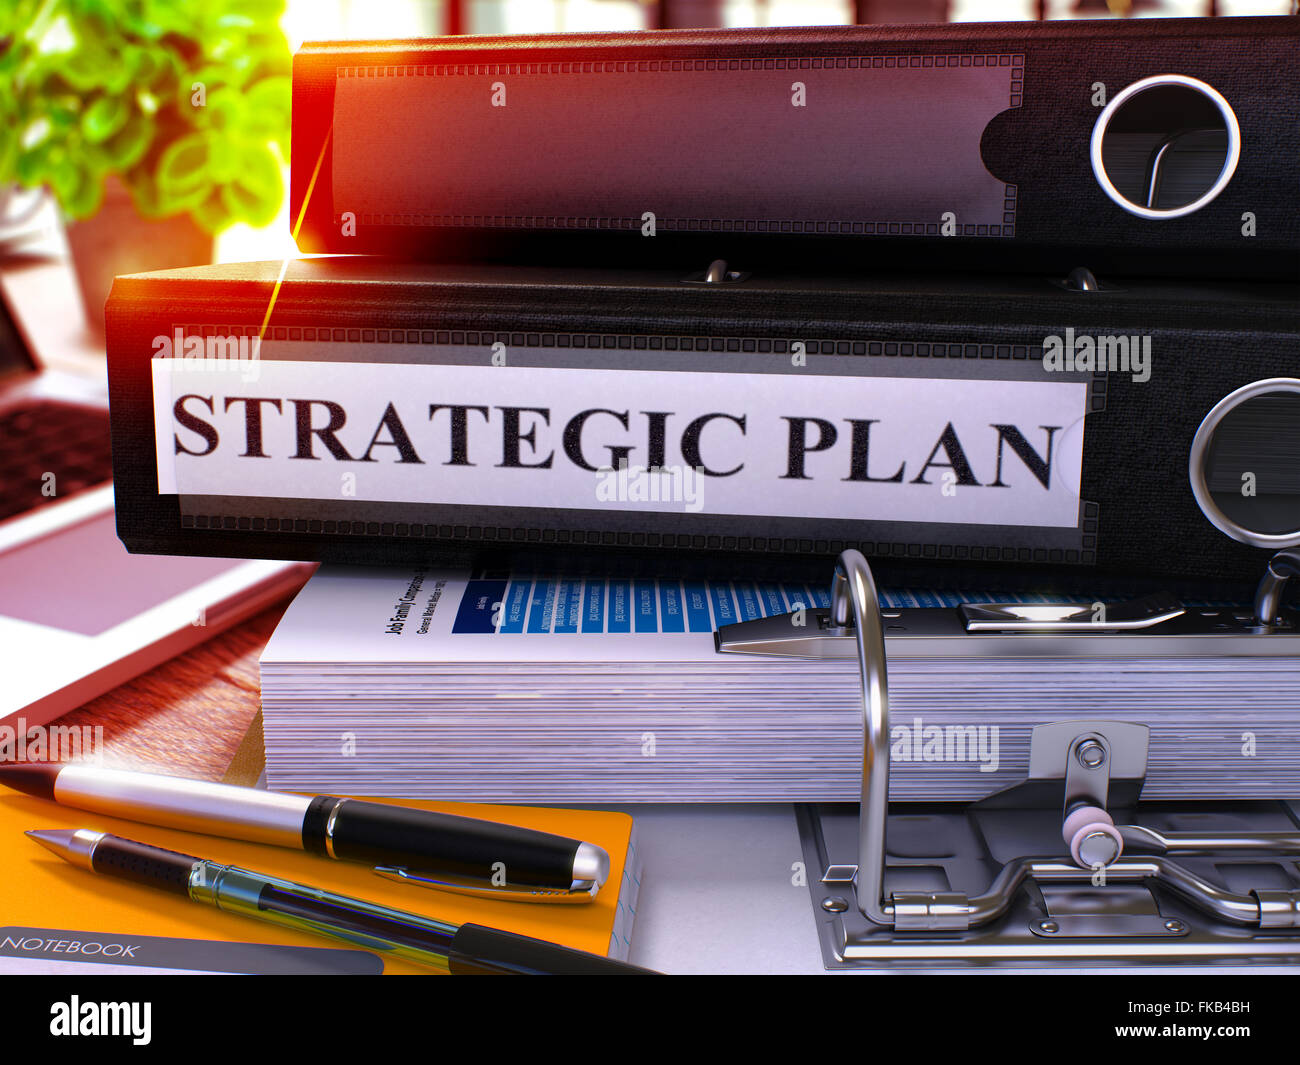 Strategic Plan on Black Ring Binder. Blurred, Toned Image. Stock Photo